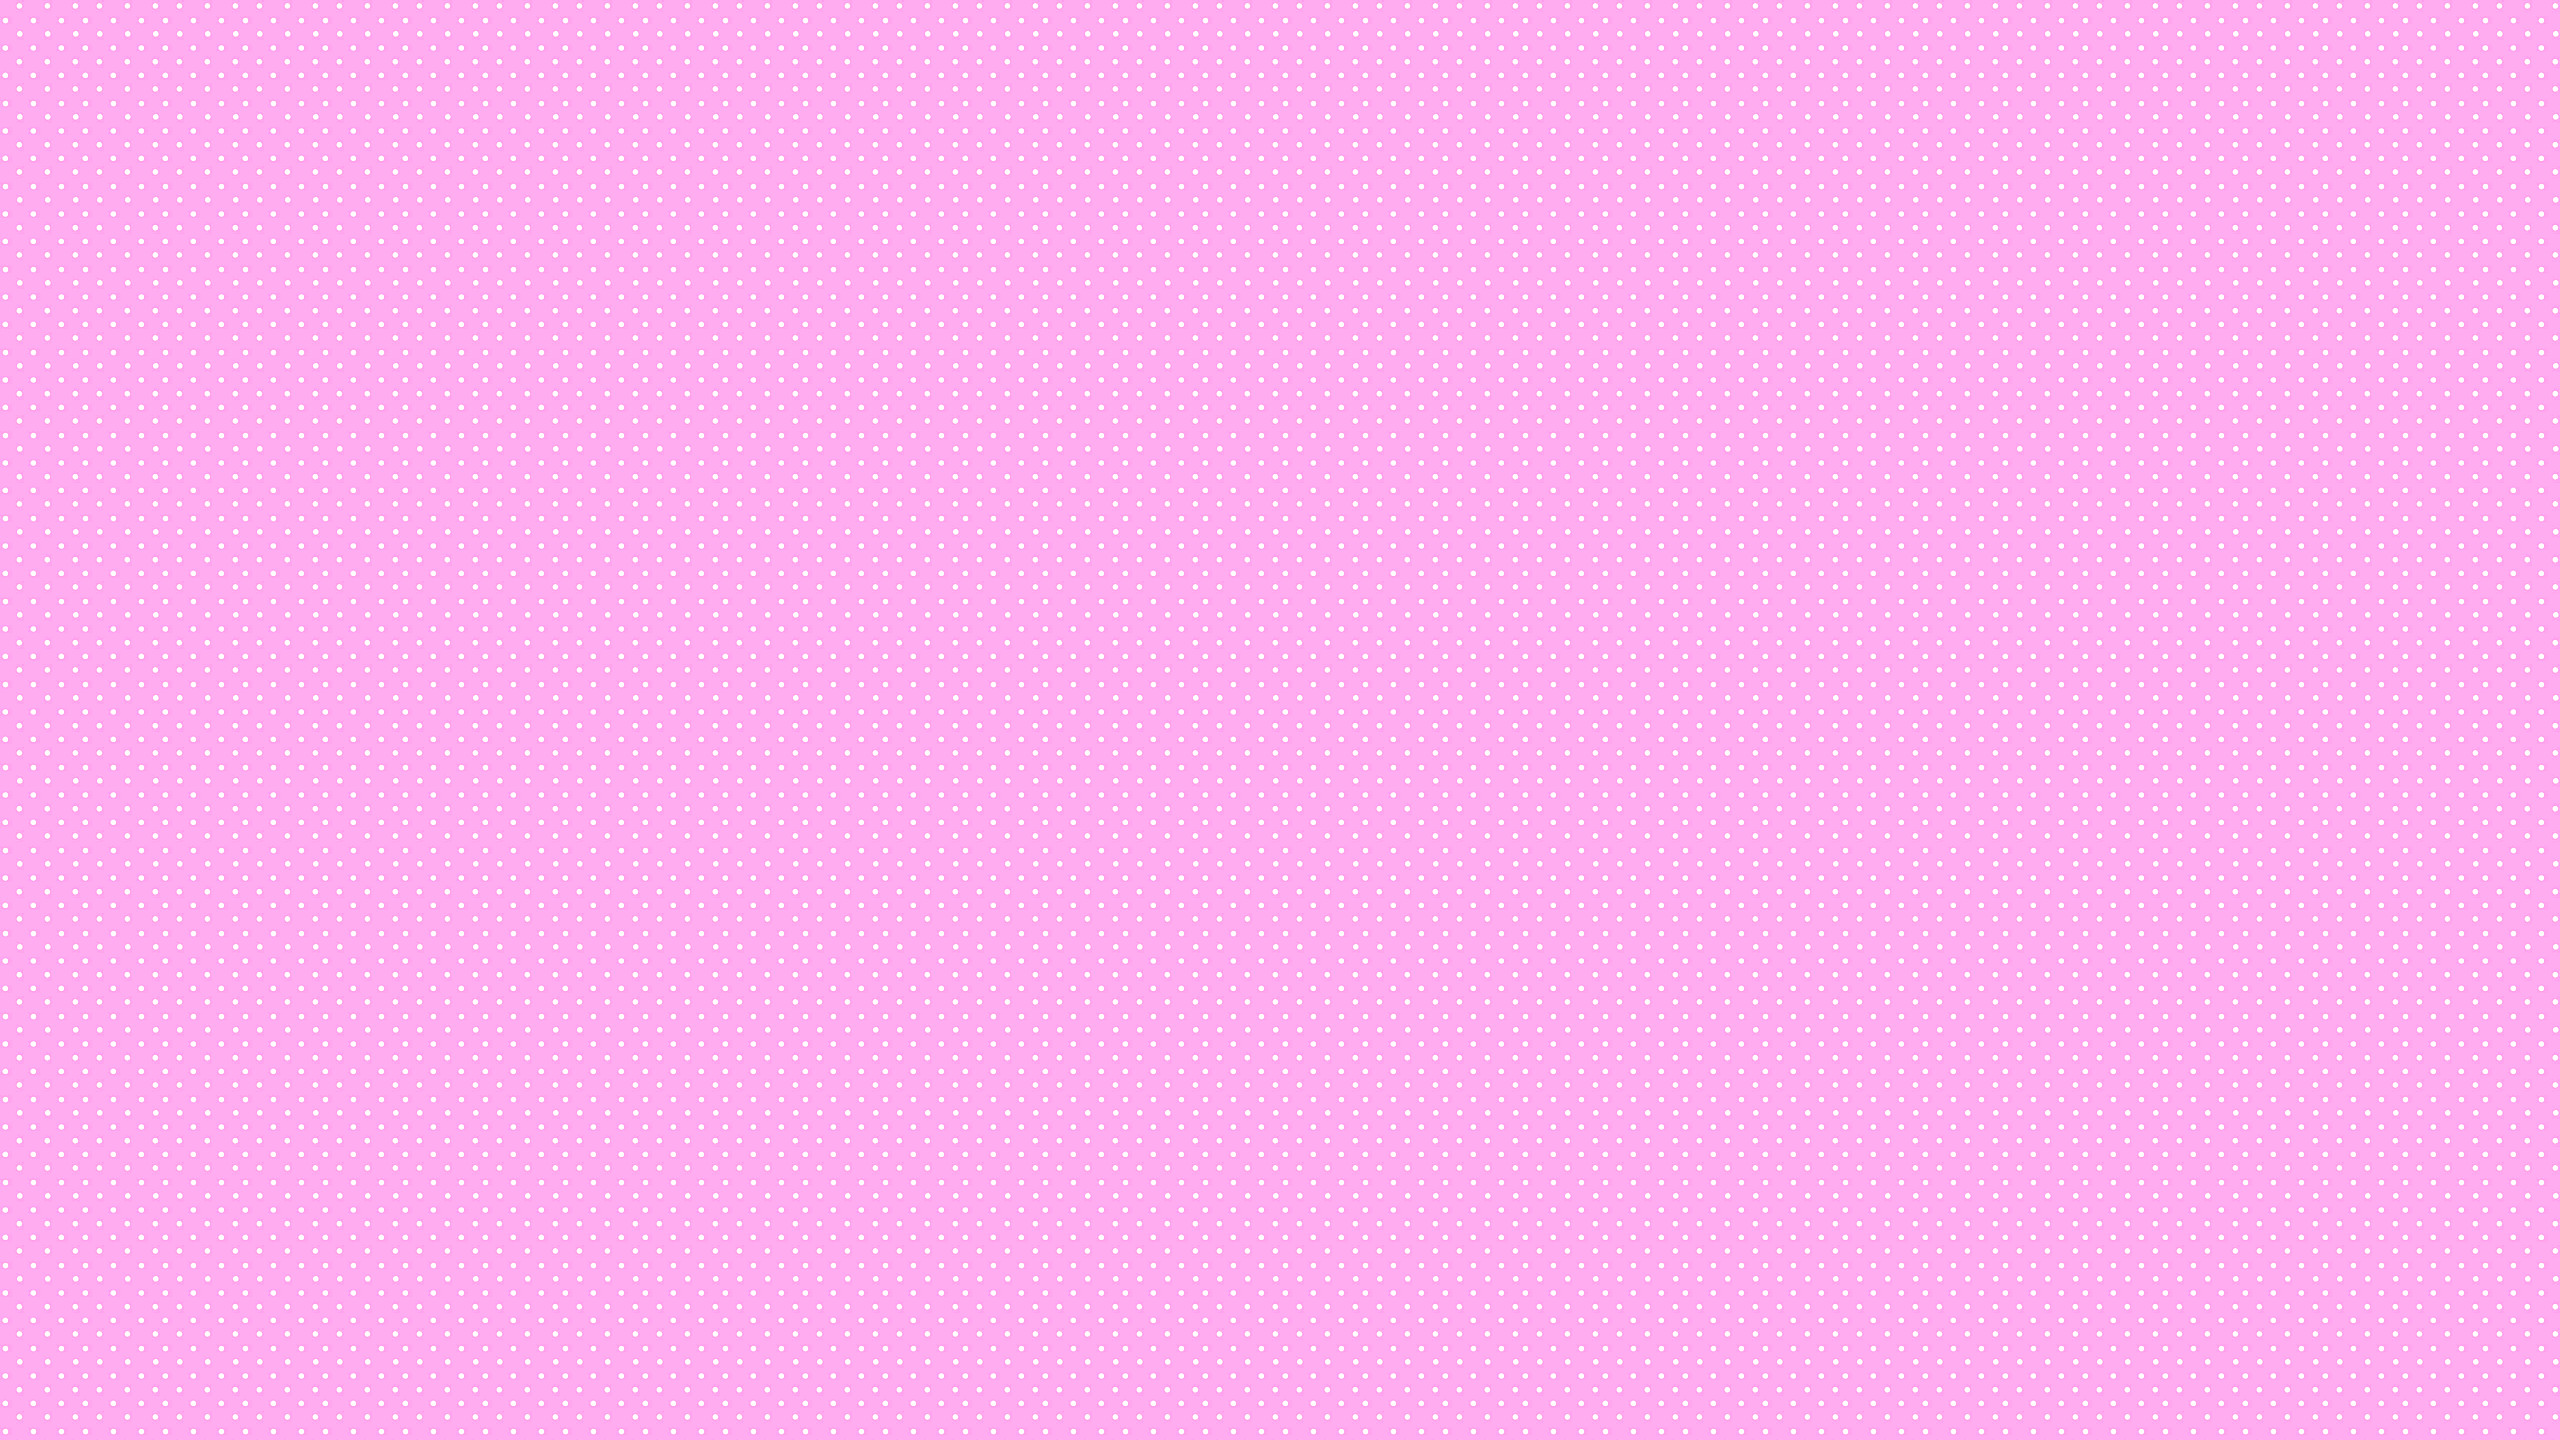 2560x1440 Background, Wallpaper, Tumblr, Plain, Pink, Wallpaper - 1970153